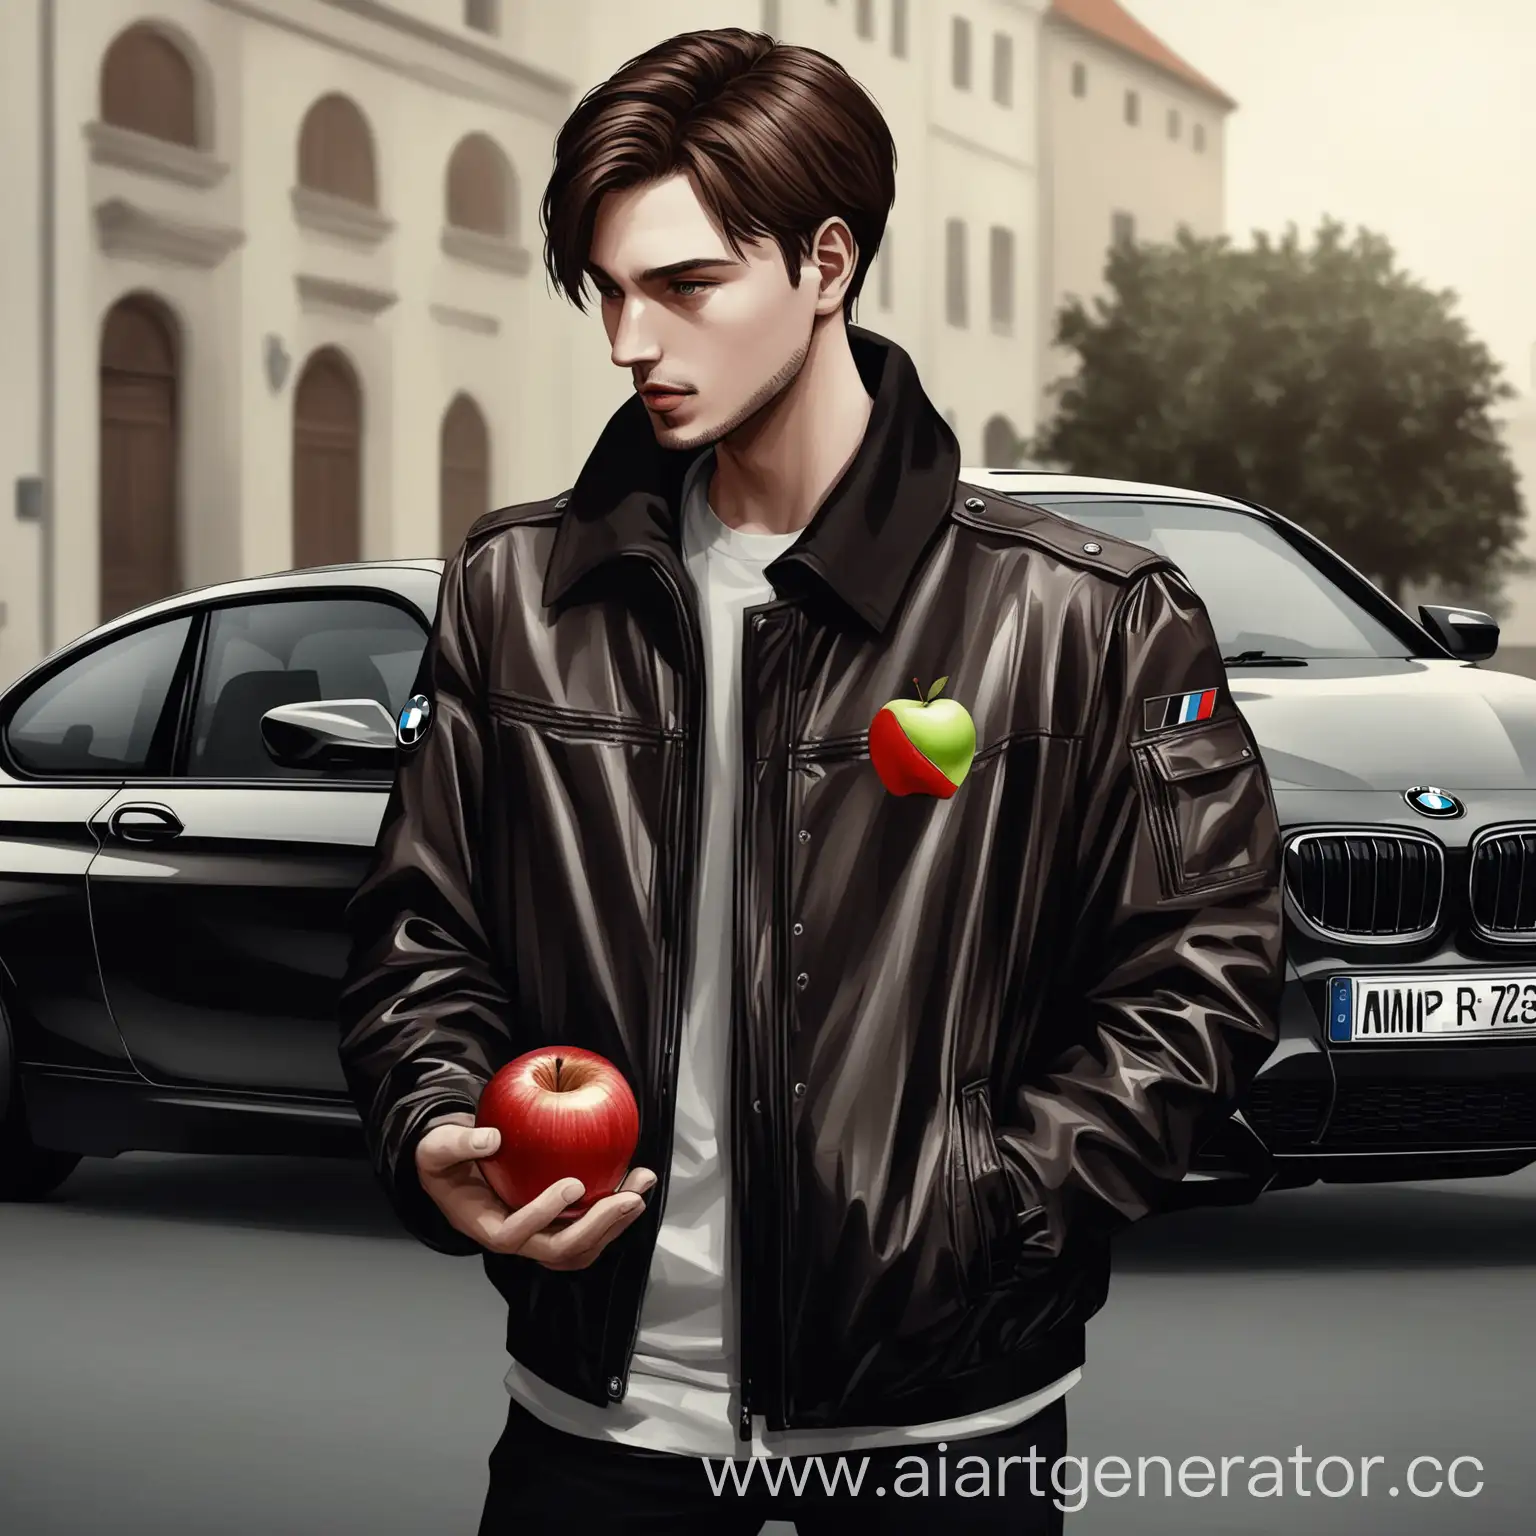 Man-in-Black-BMW-Jacket-with-Apple-Emblem